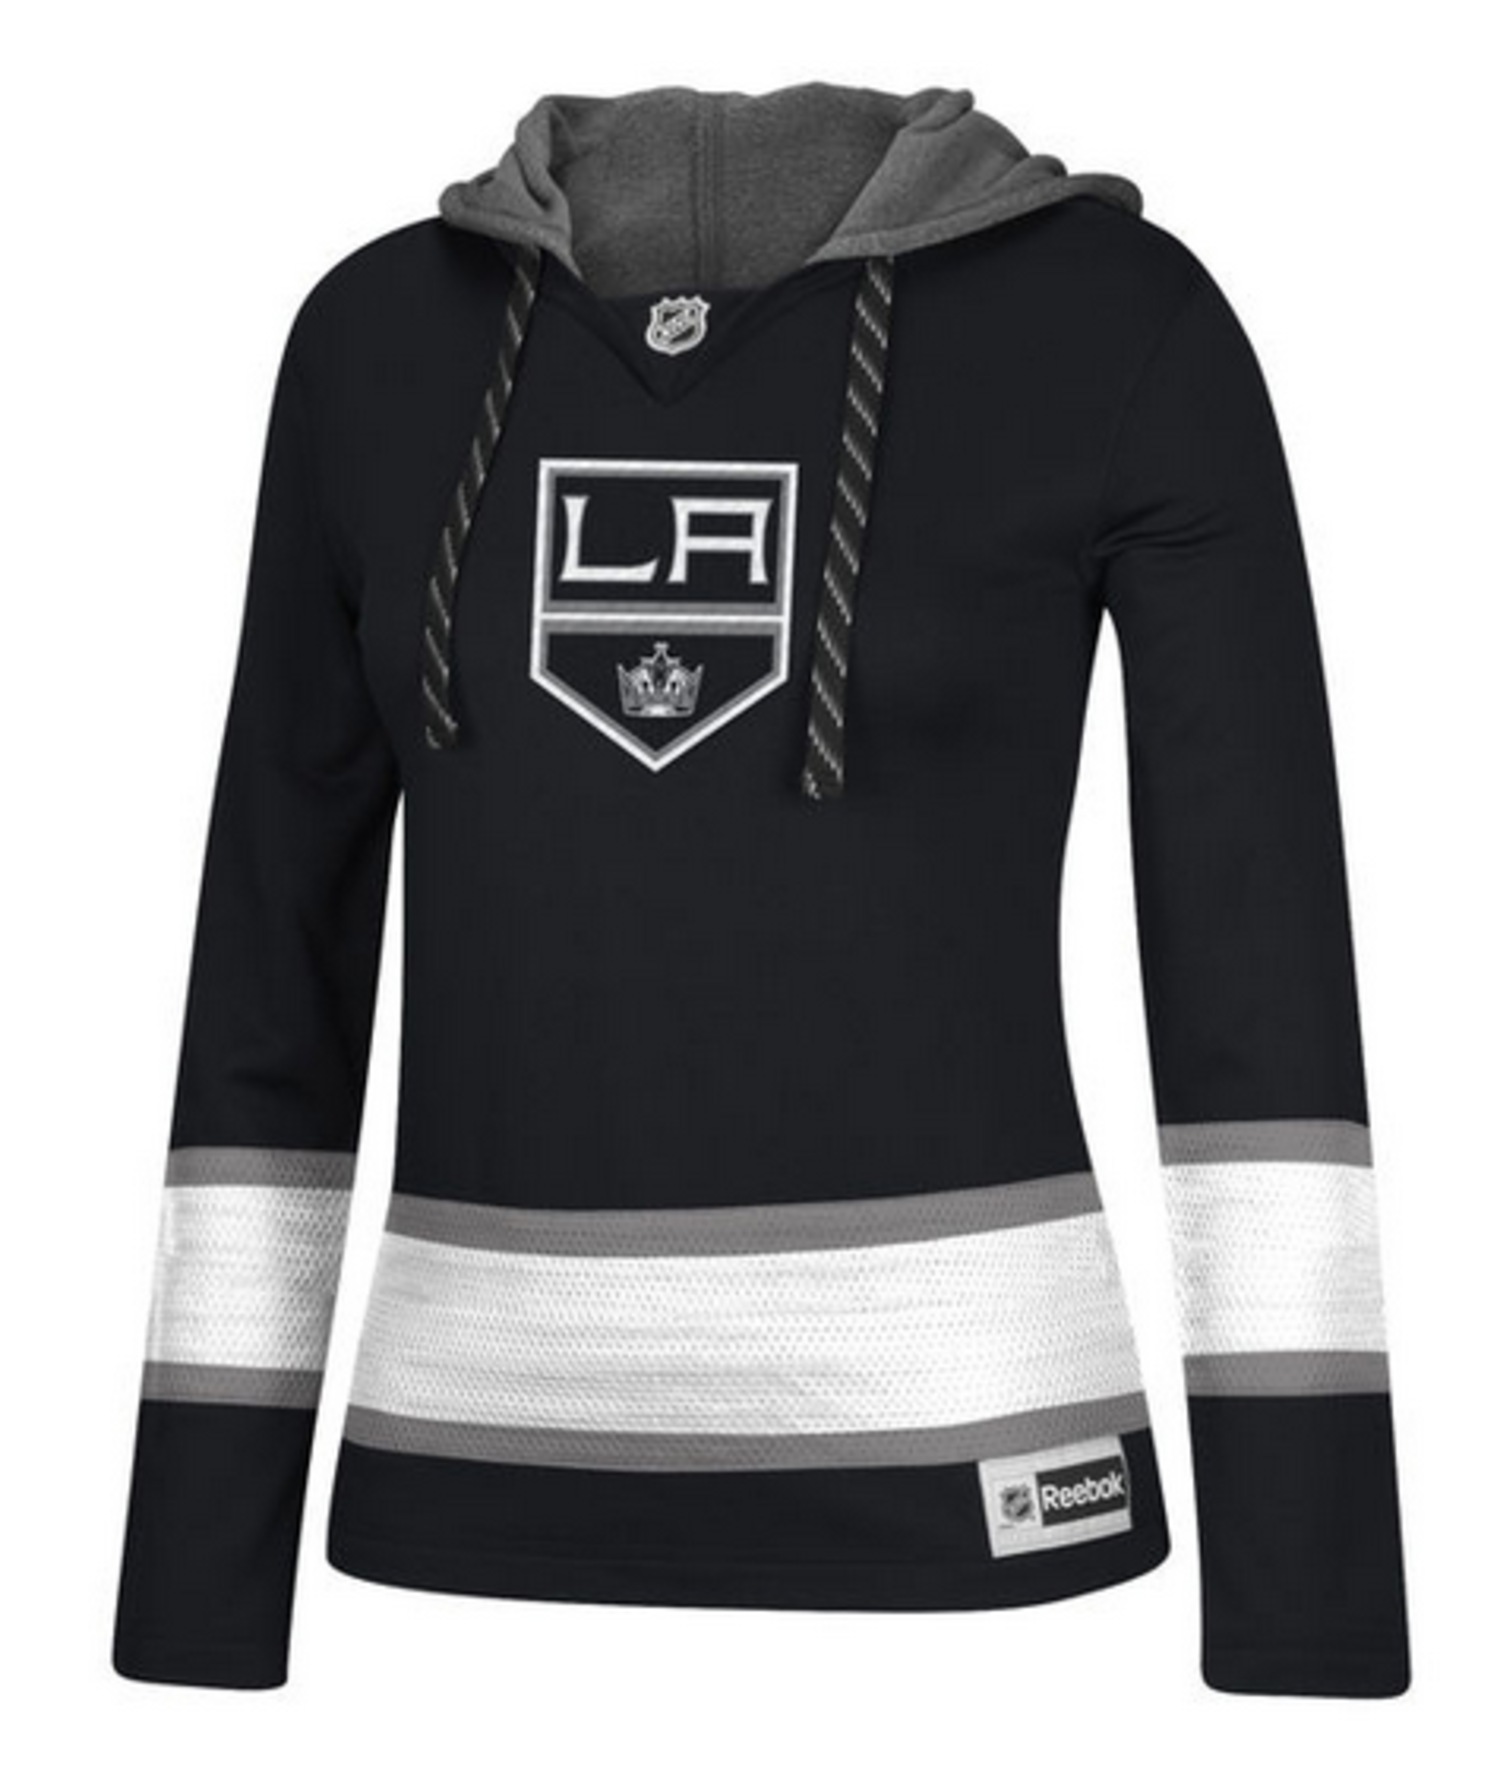 LA Kings Reebok NHL Alternate Jersey Black/White/Silver Size Large -  Waterfront Online